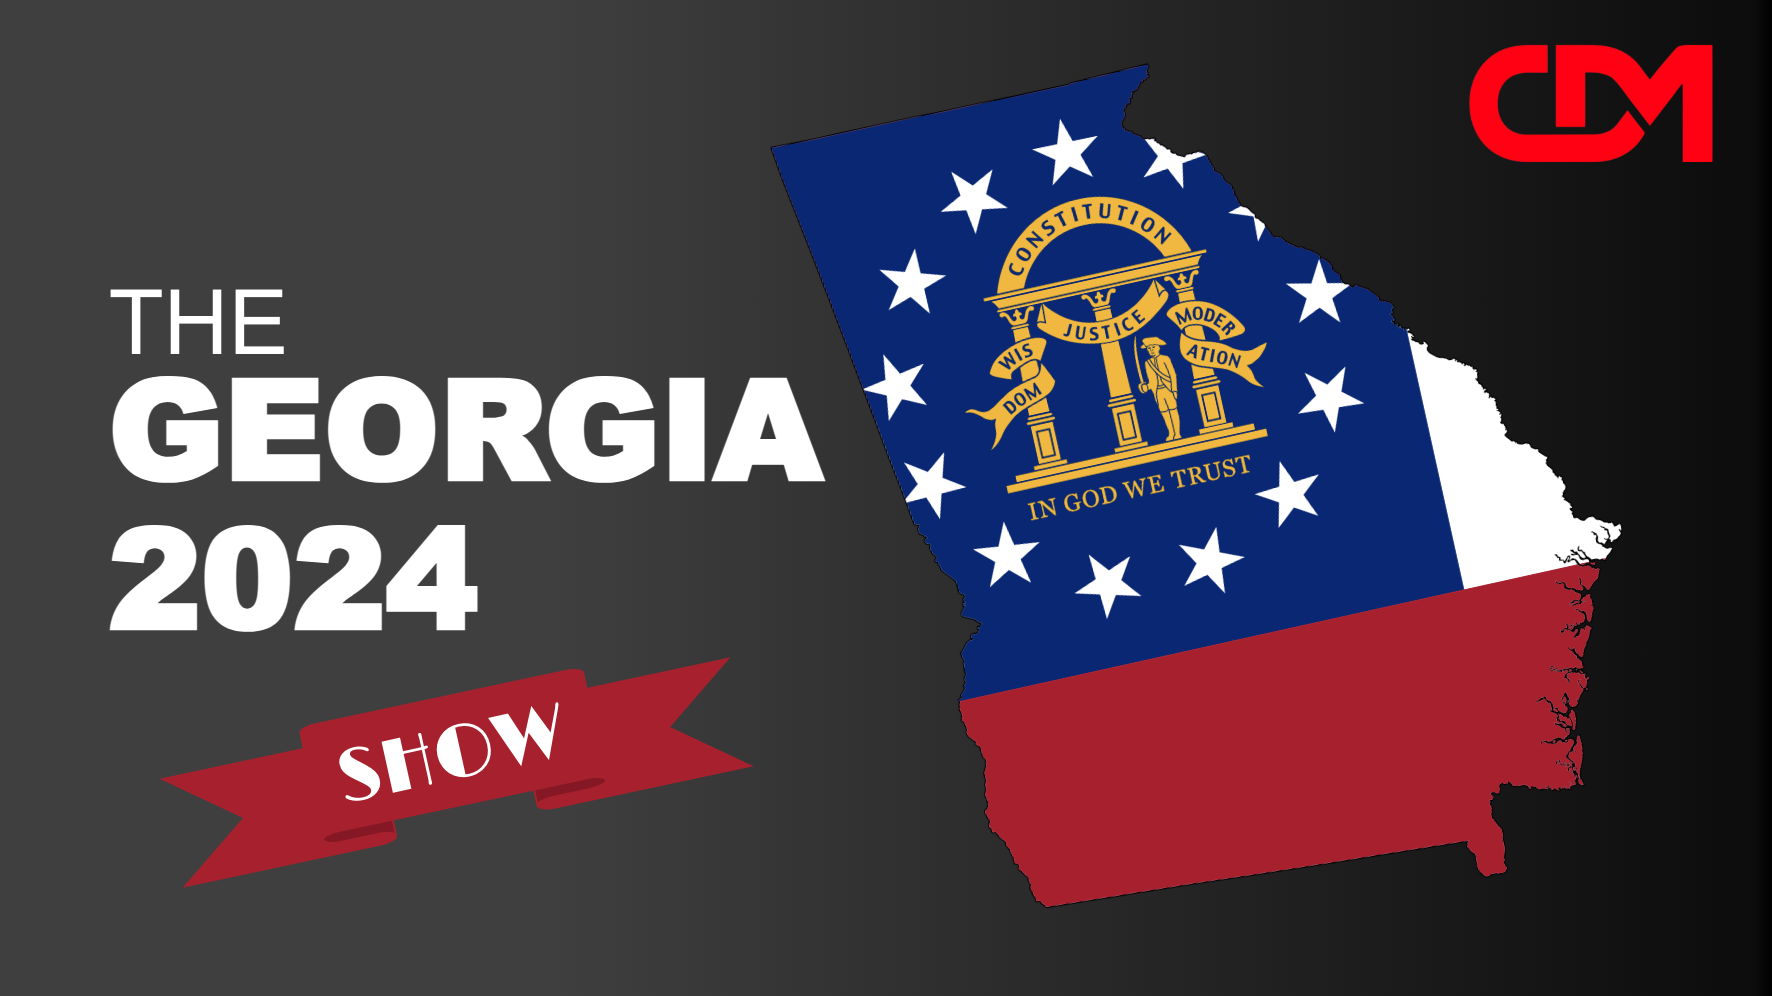 LIVE 2pm EST: The Georgia 2024 Show! Lisa Babbage, David Cross